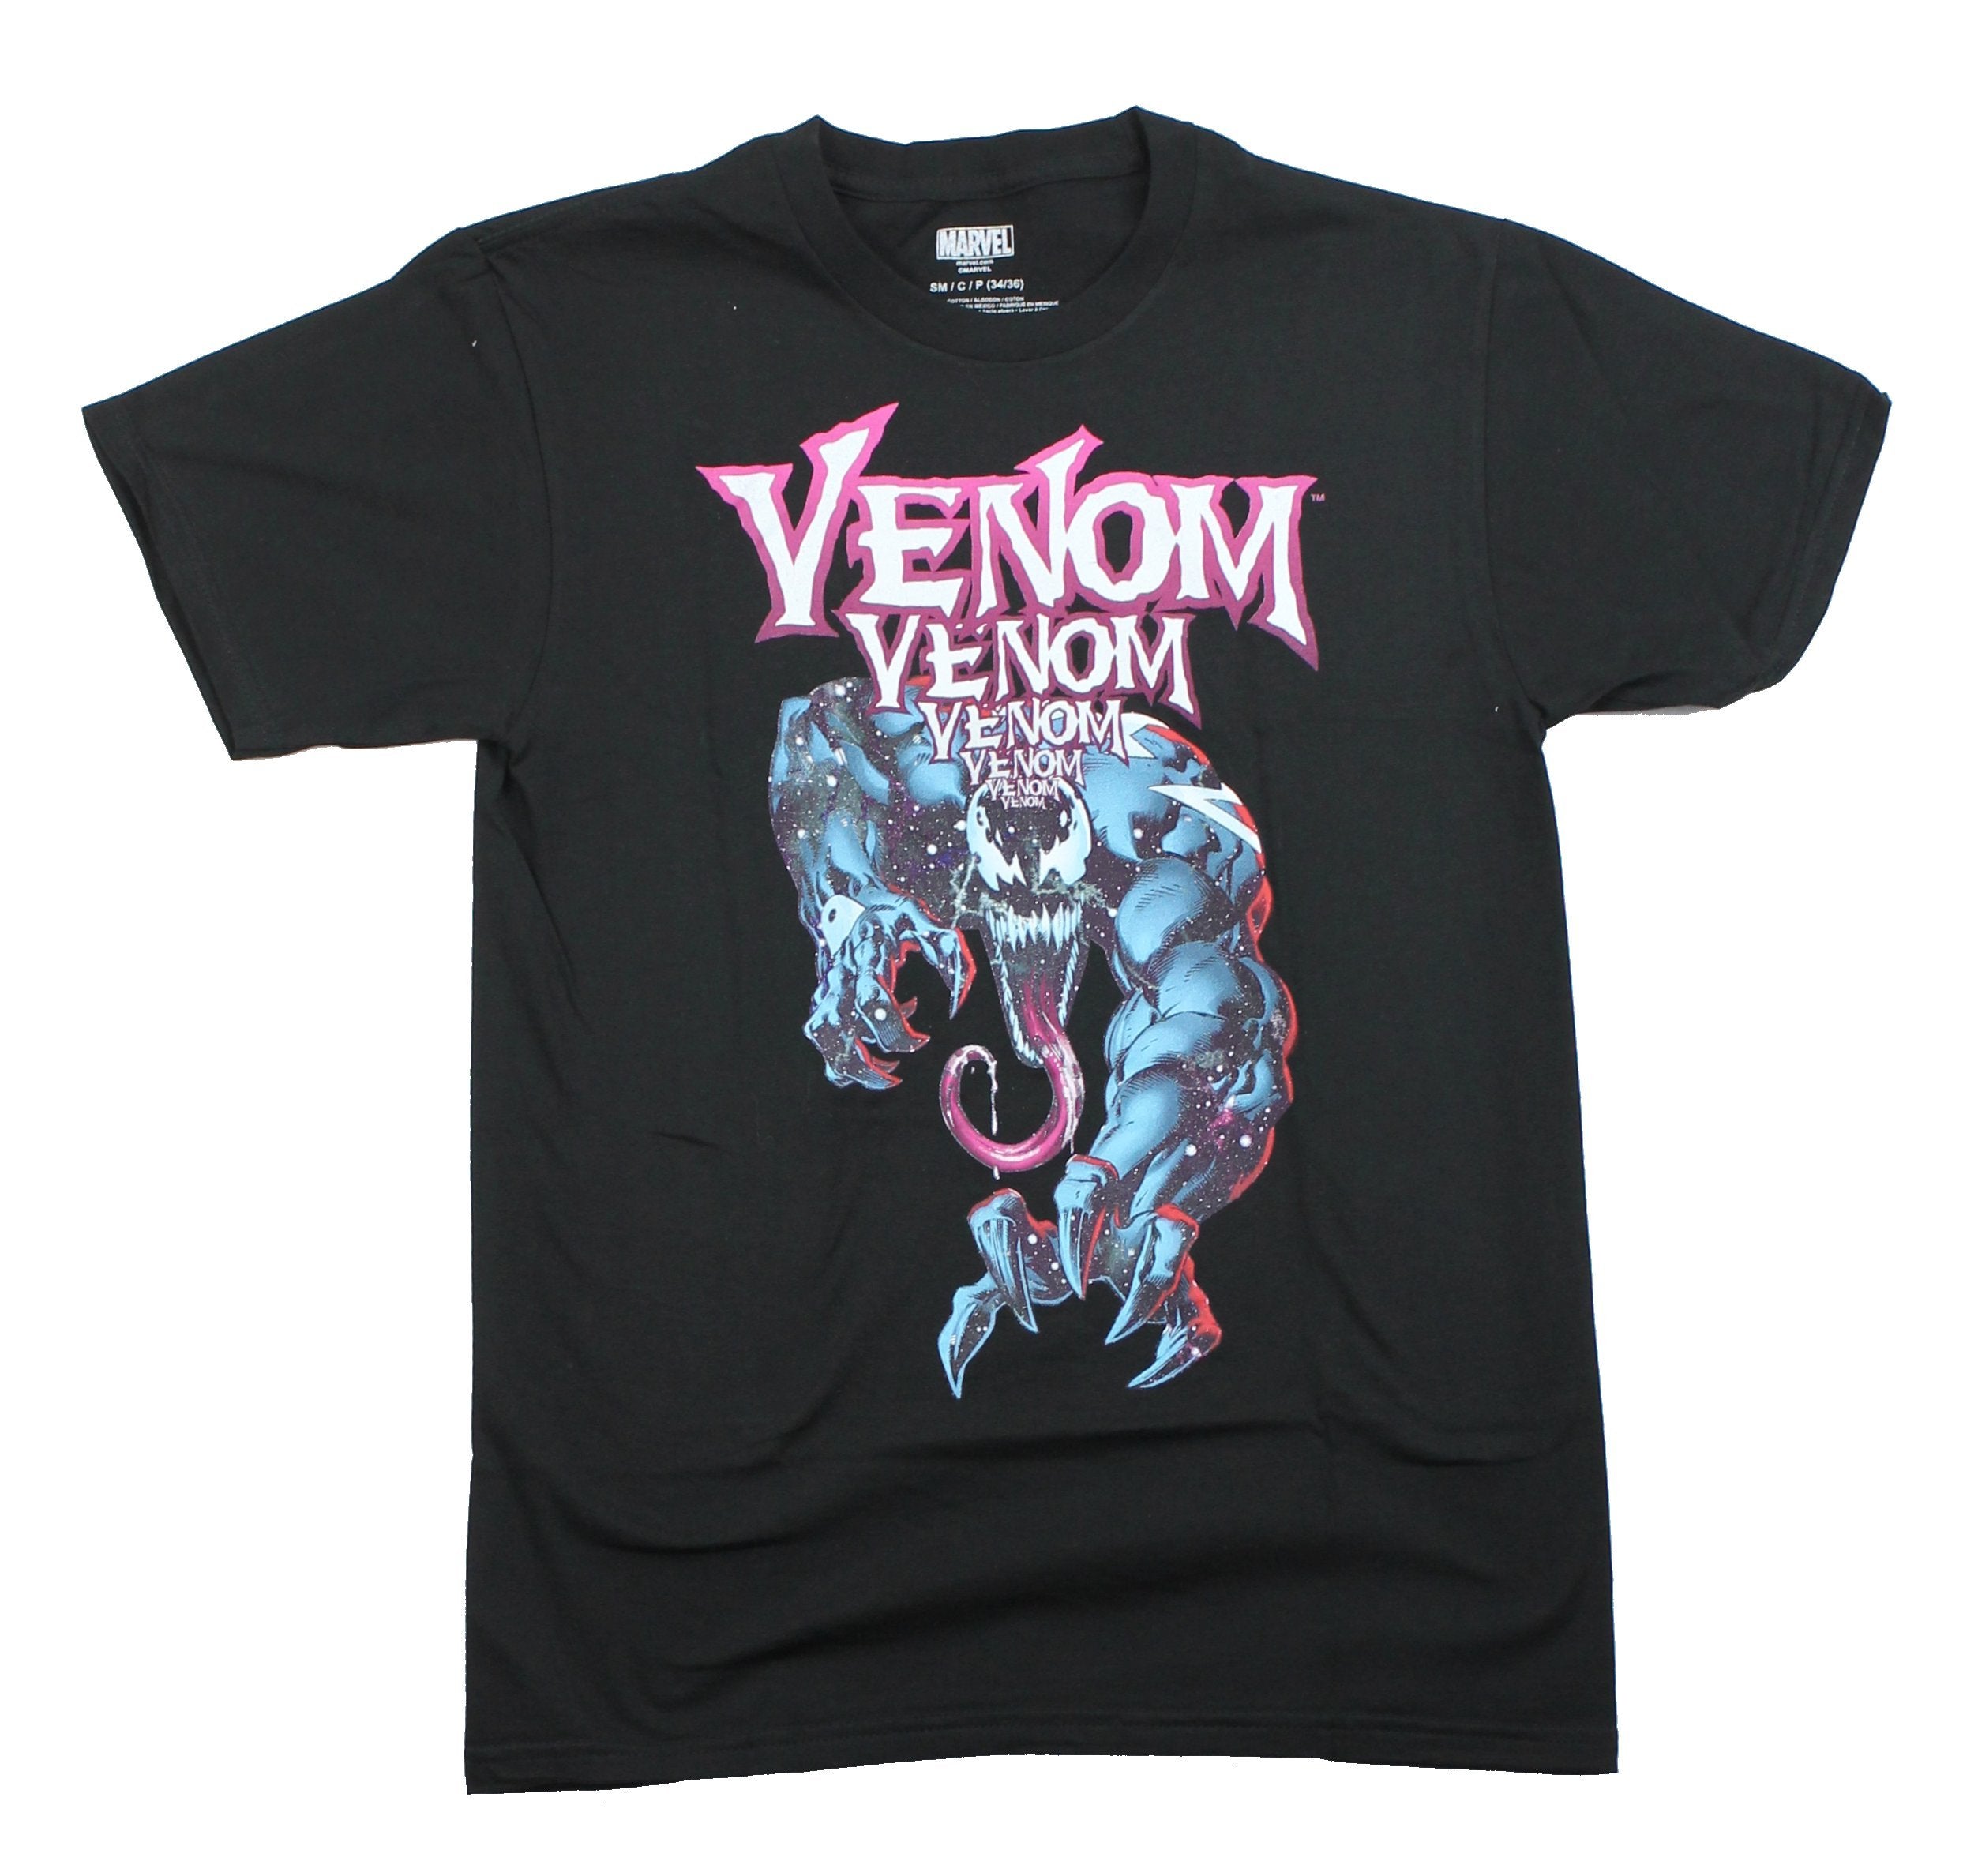 Venom (Marvel Comics) Mens T-Shirt - Spitting Mad Venom Name drop Image